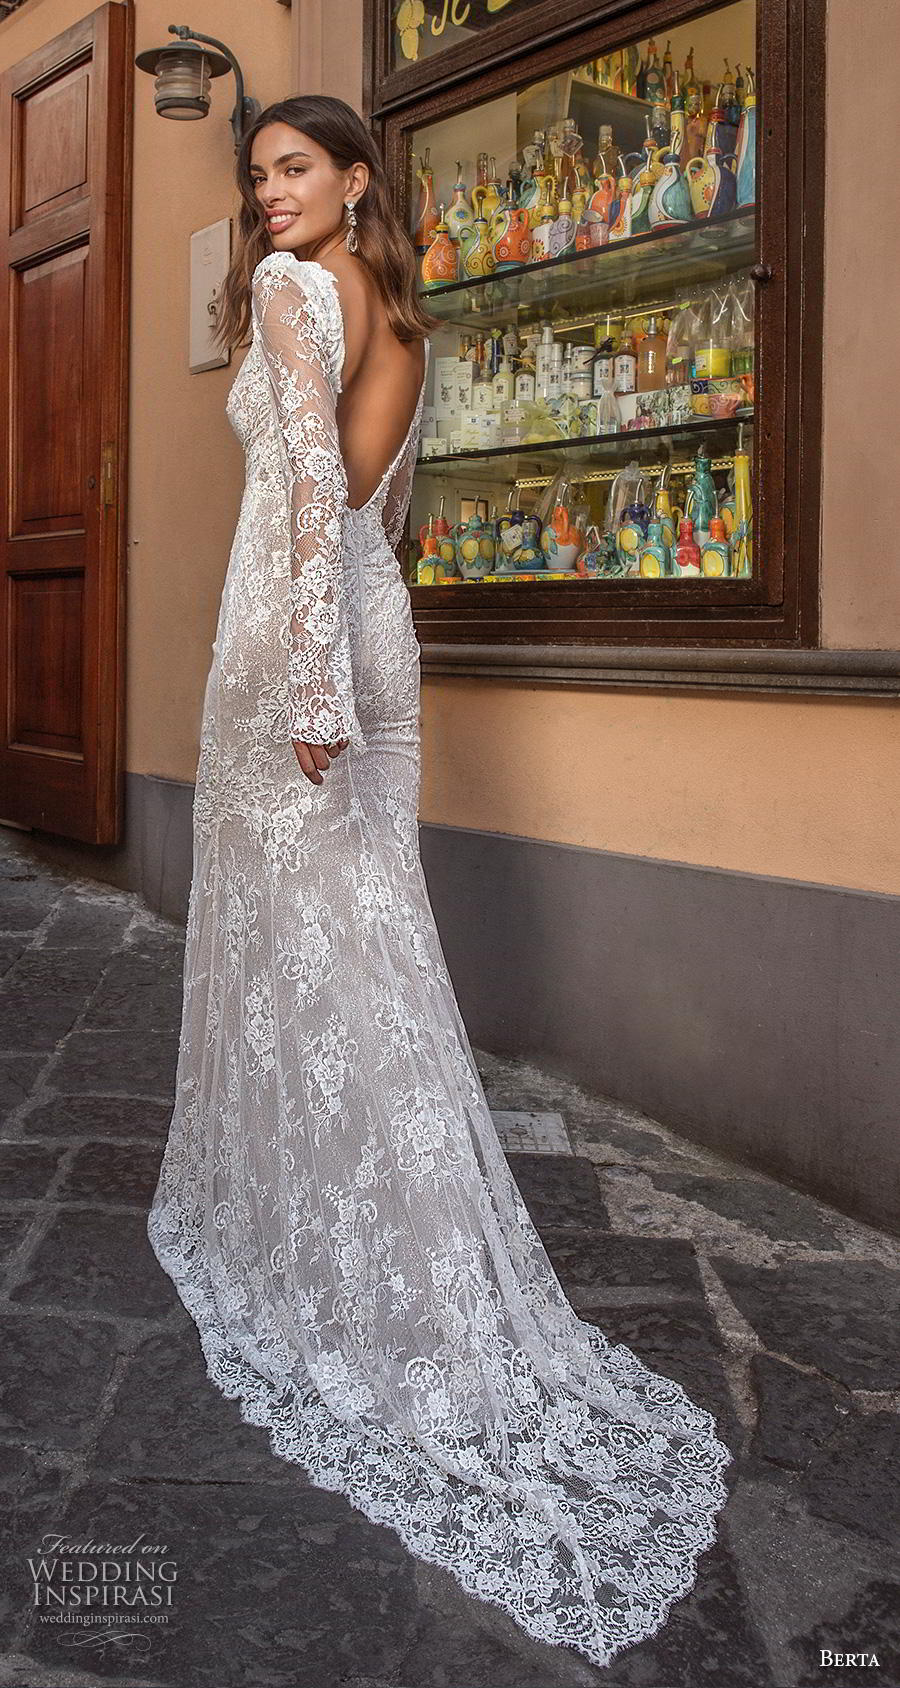 berta 2020 privee bridal long sleeves deep v neck full embellishment elegant fit and flare wedding dress backless low back medium train (10) bv